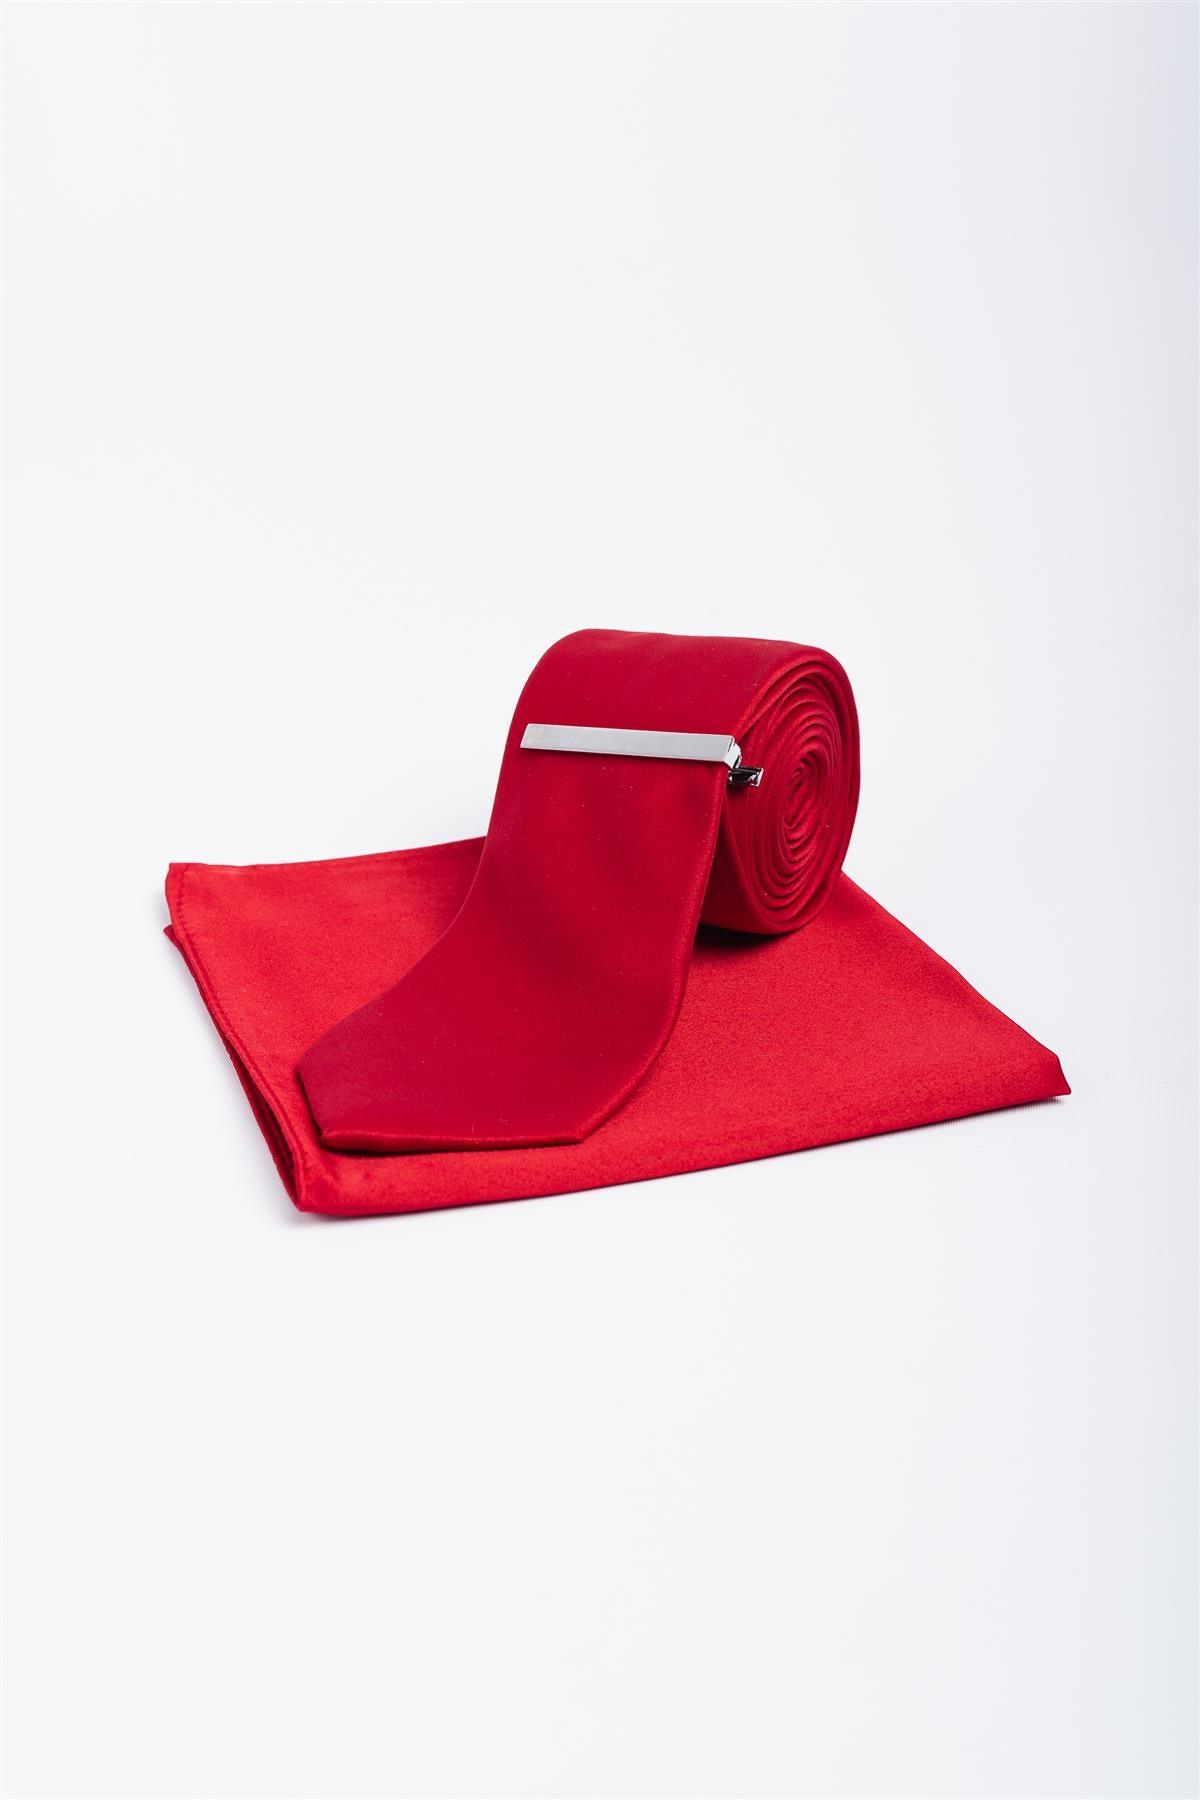 Plain red tie set